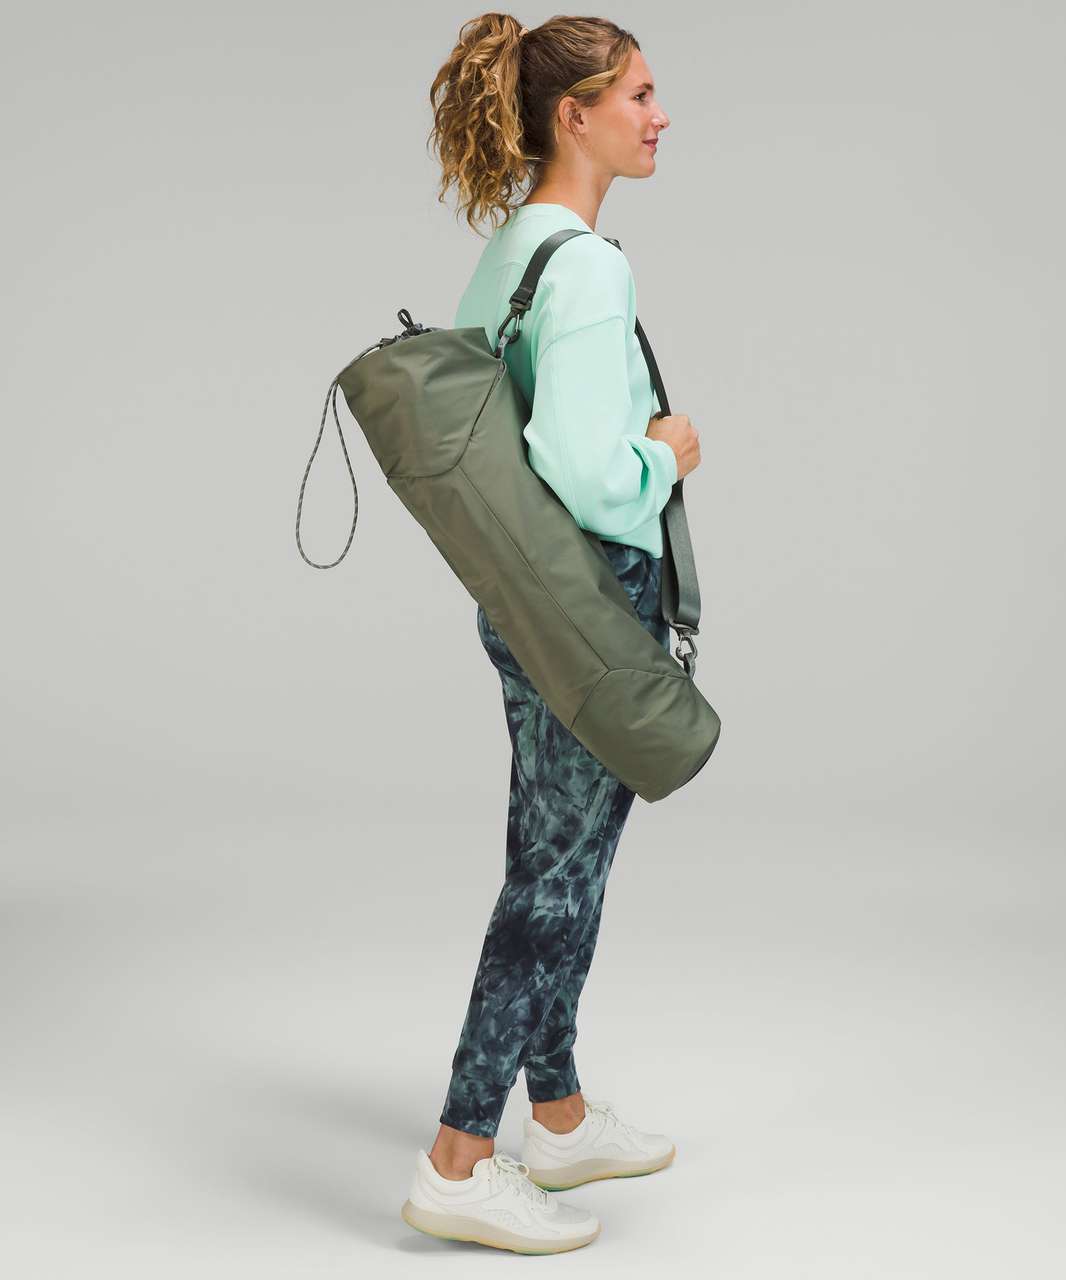 Lululemon Bag With Yoga Mat Holder